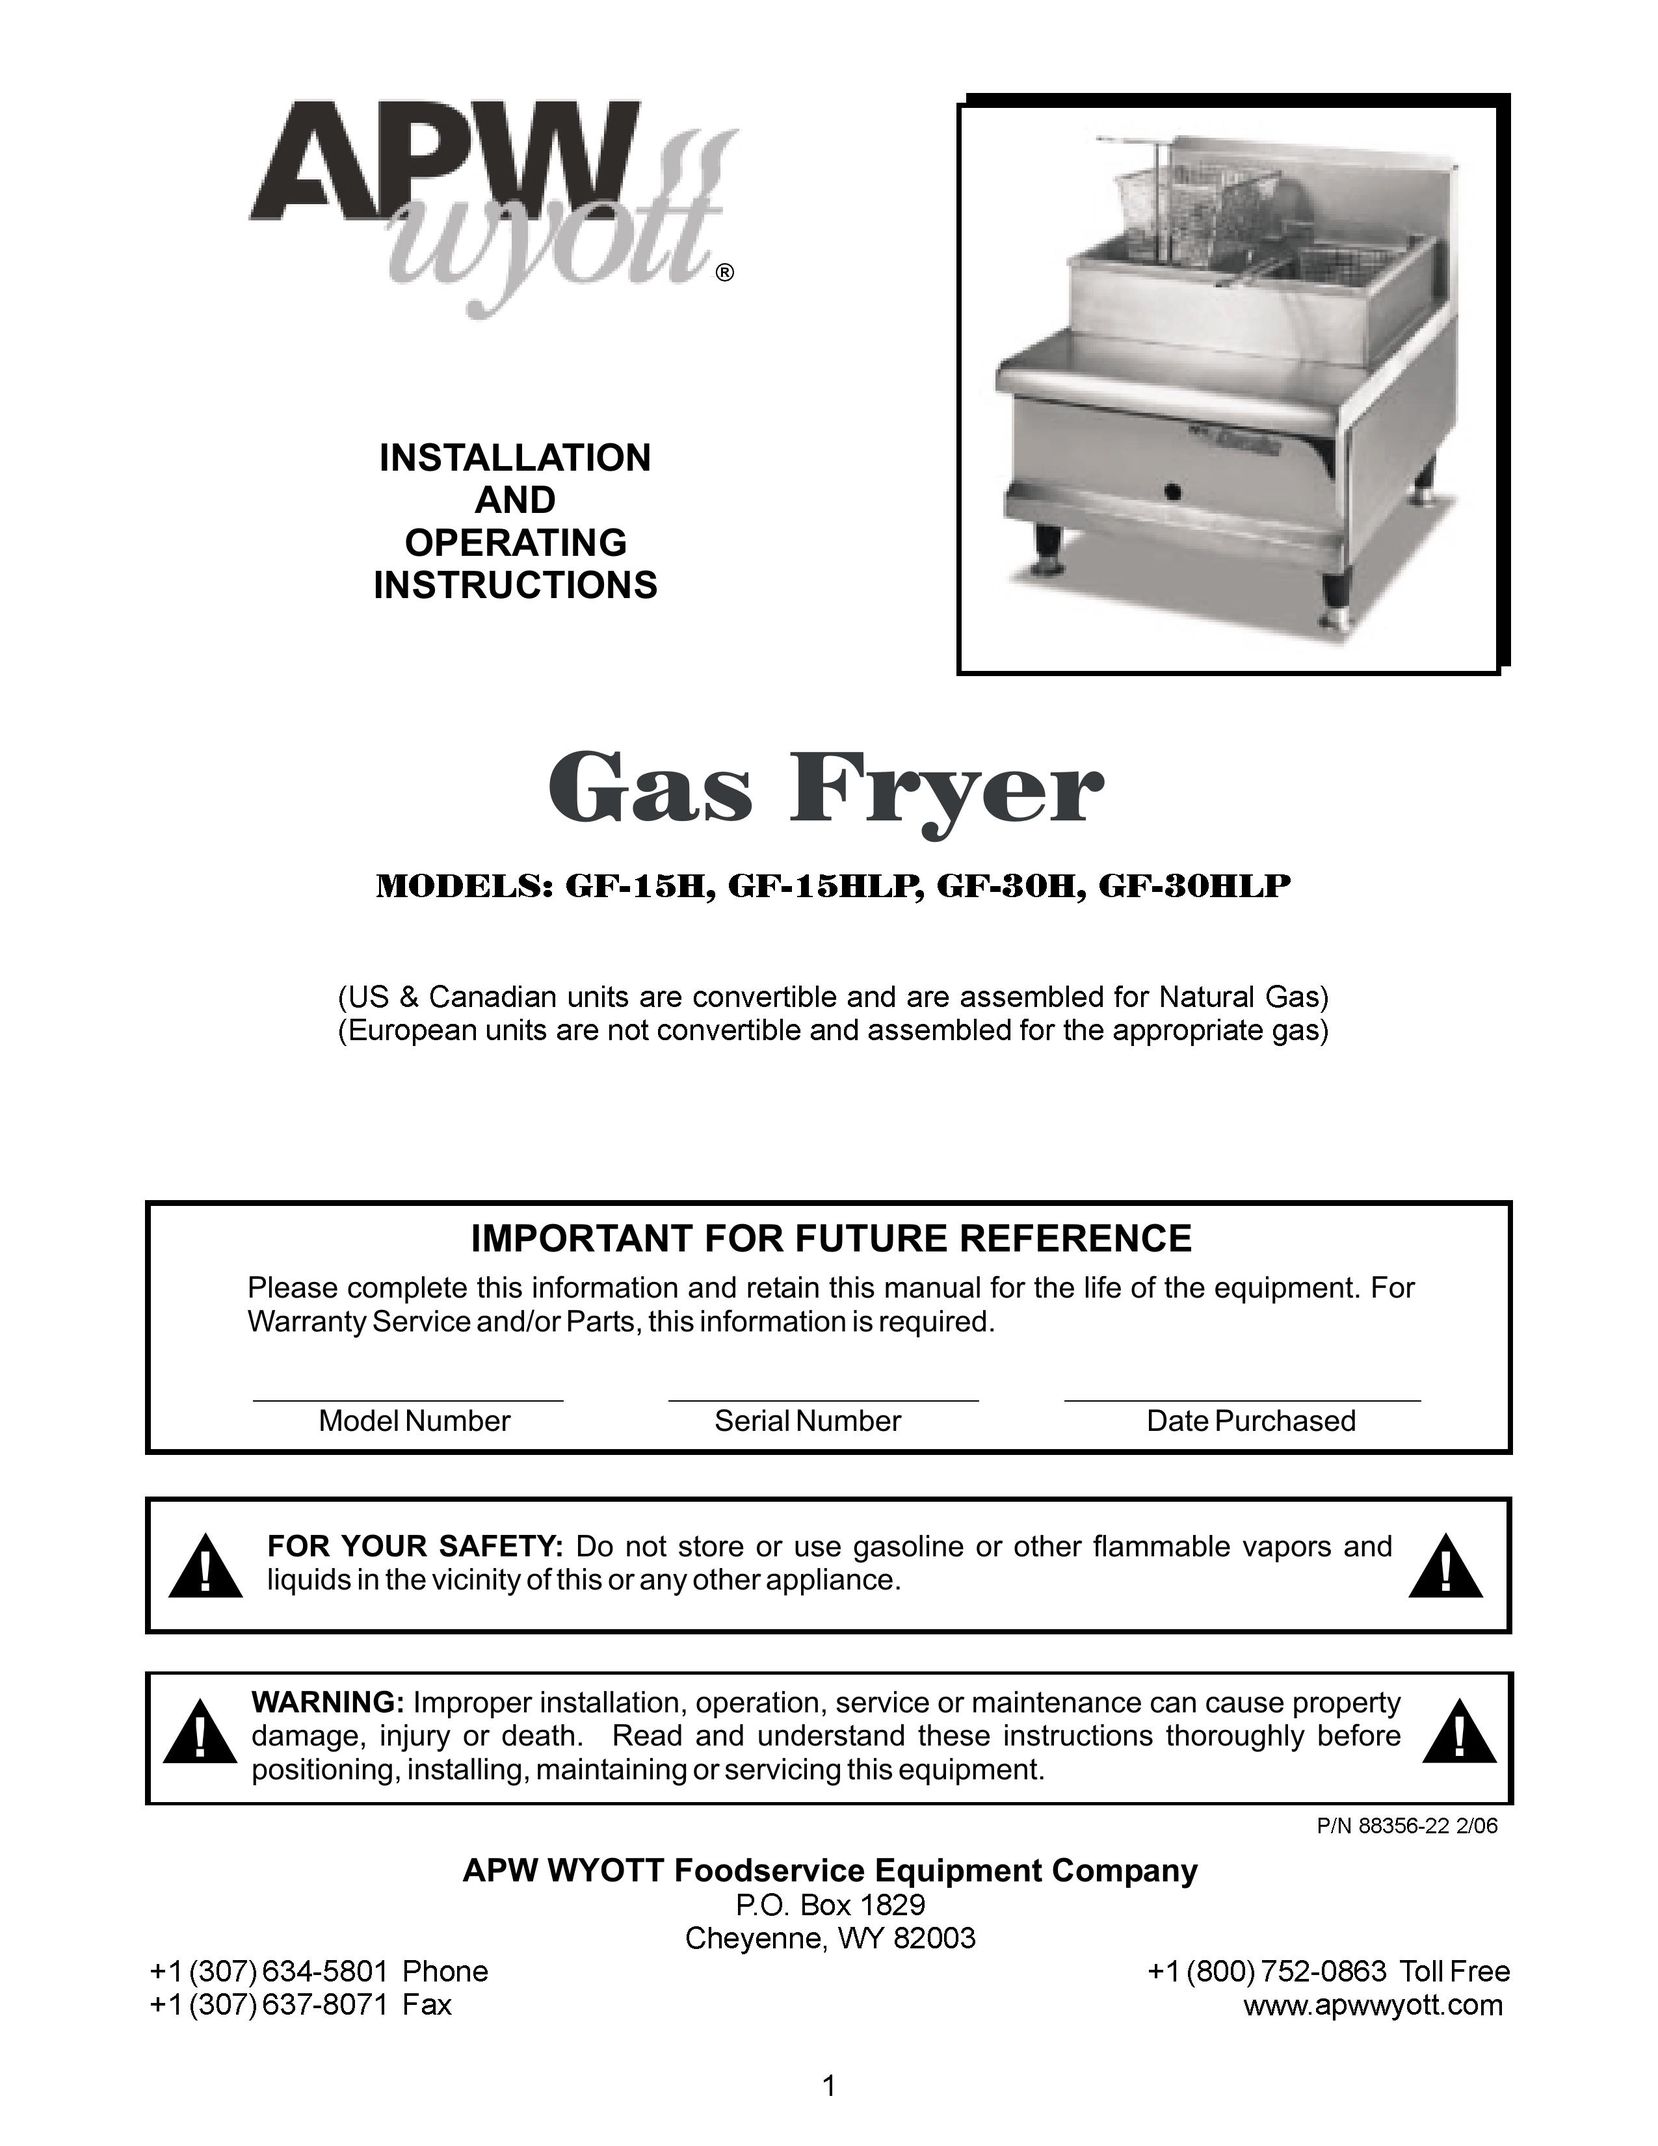 APW Wyott GF-15H Fryer User Manual